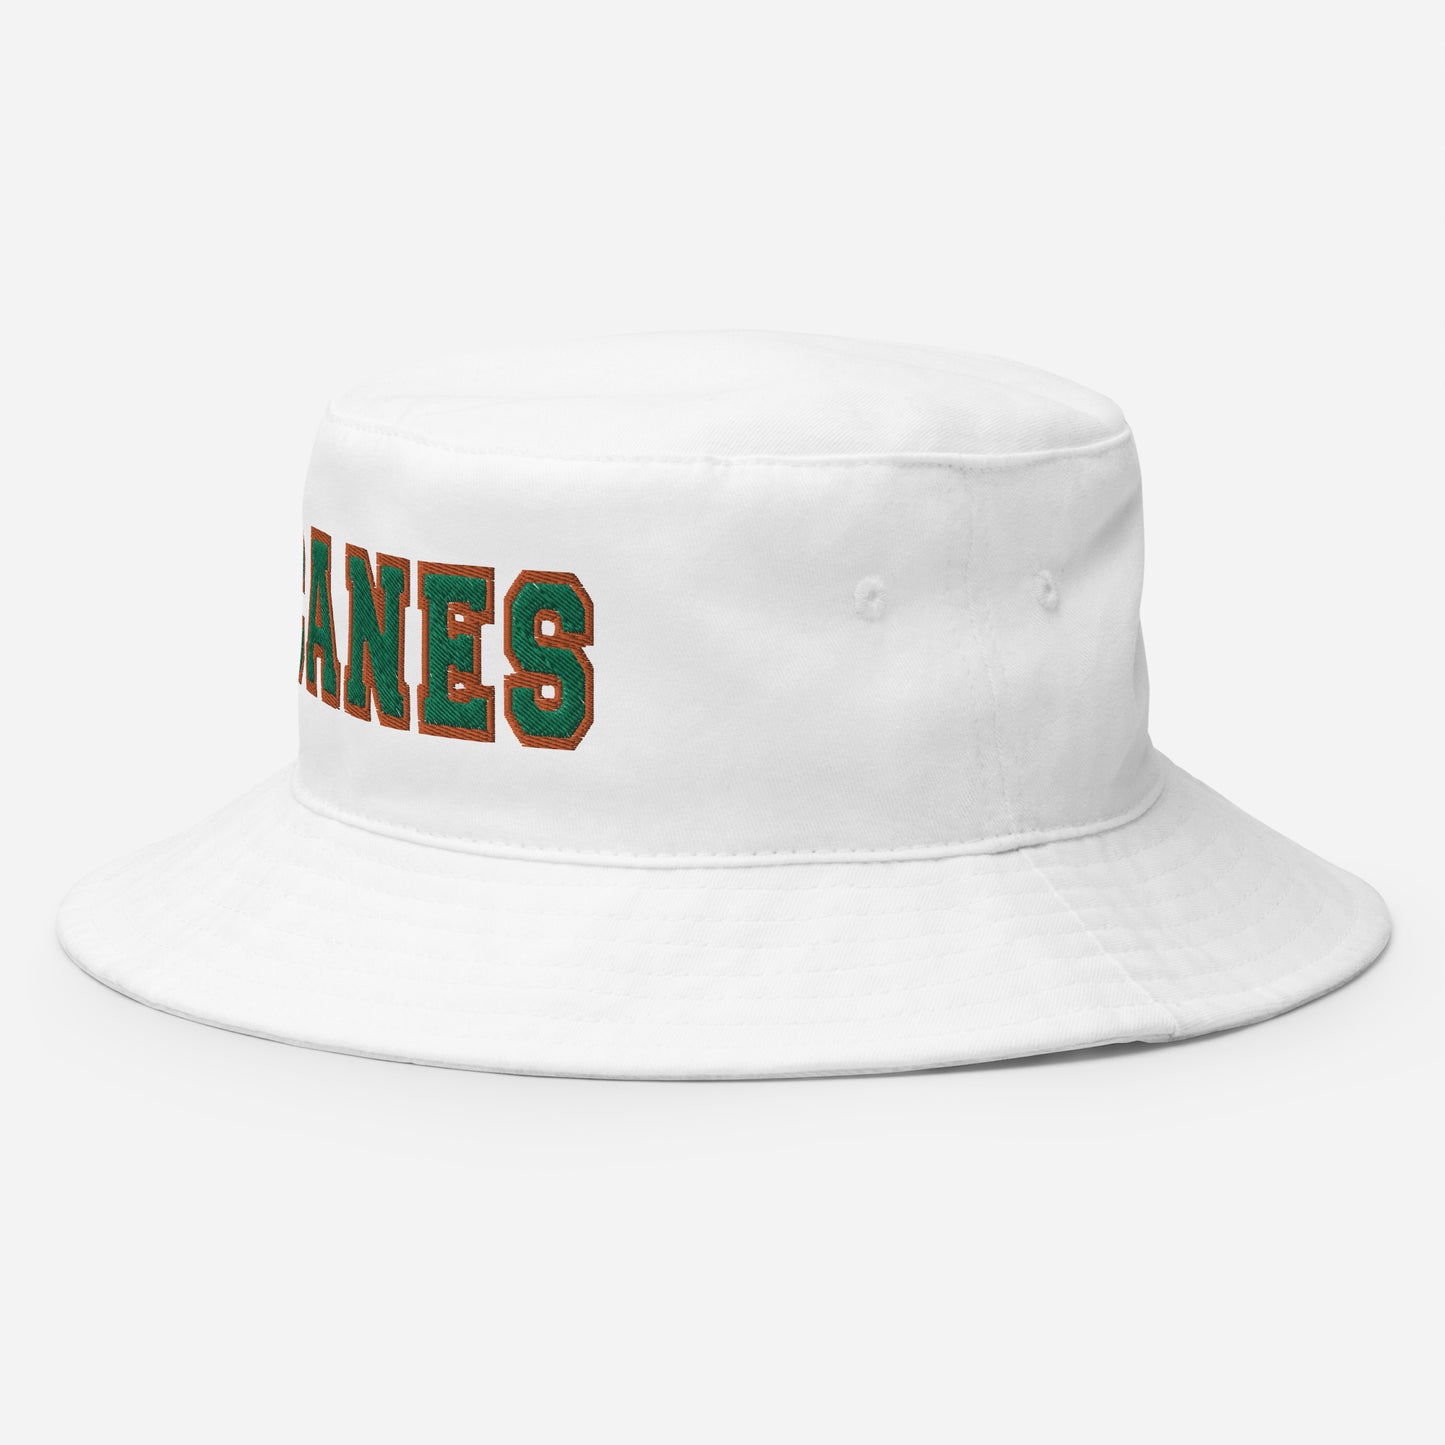 Miami Bucket Hat Canes Cap - Hialeah Hat Mart